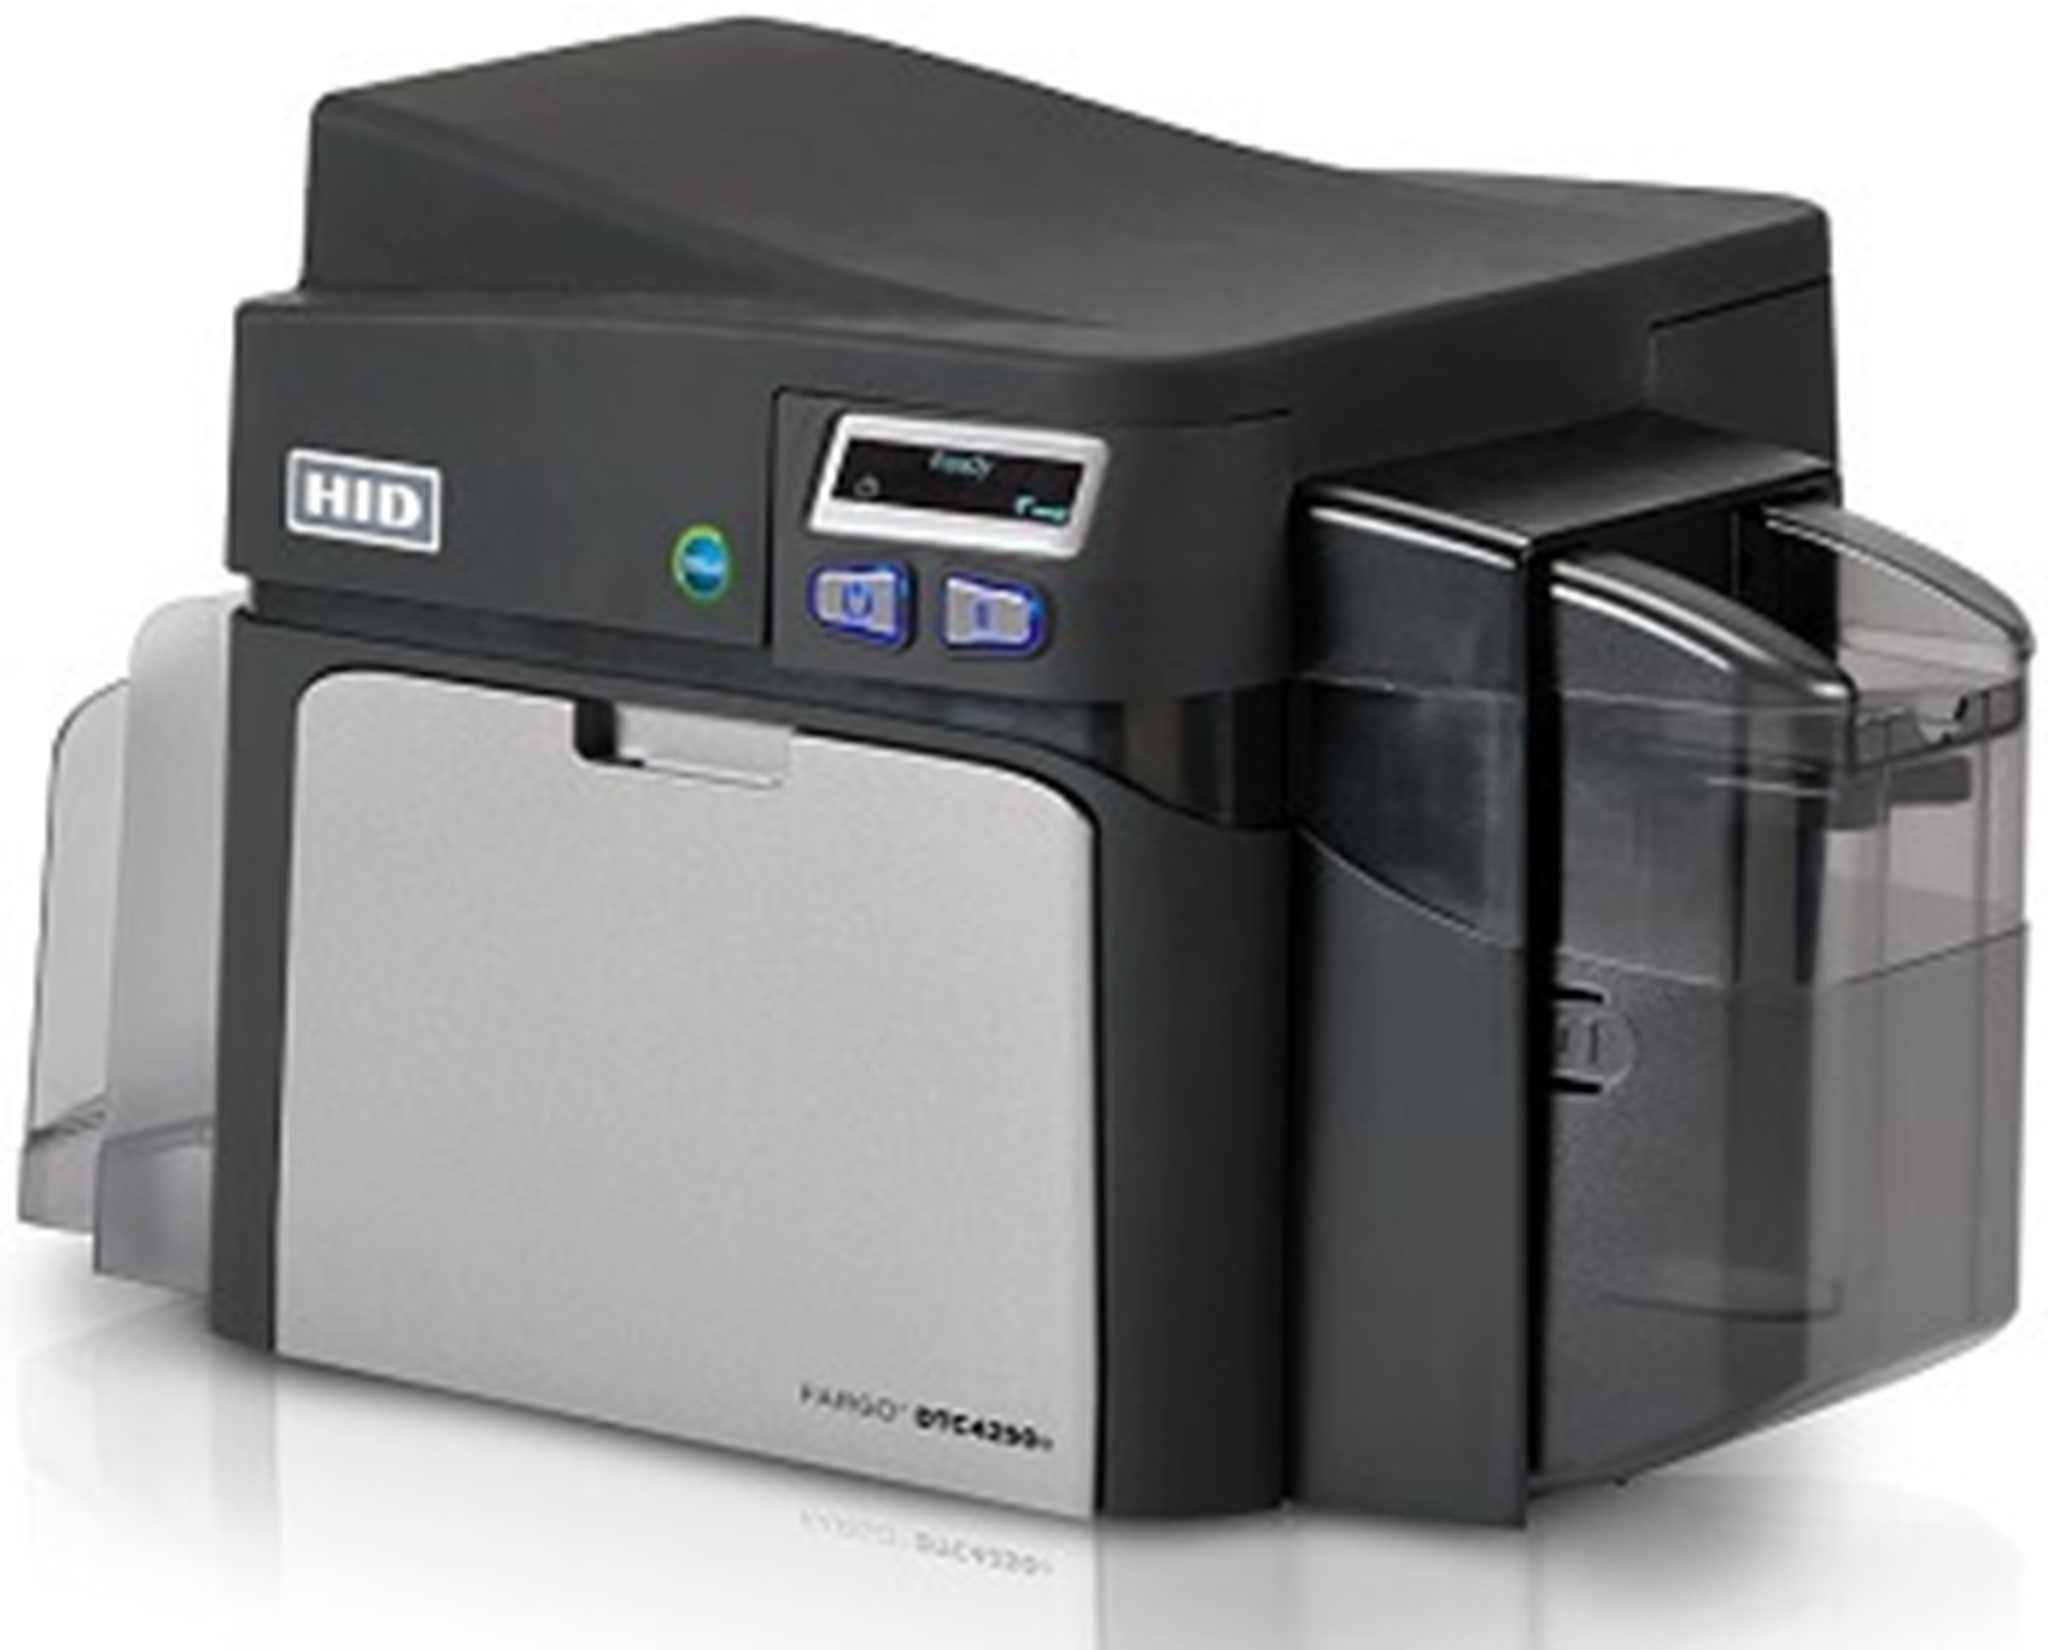 DTC 4250e ID card printer available from eCardz NZ